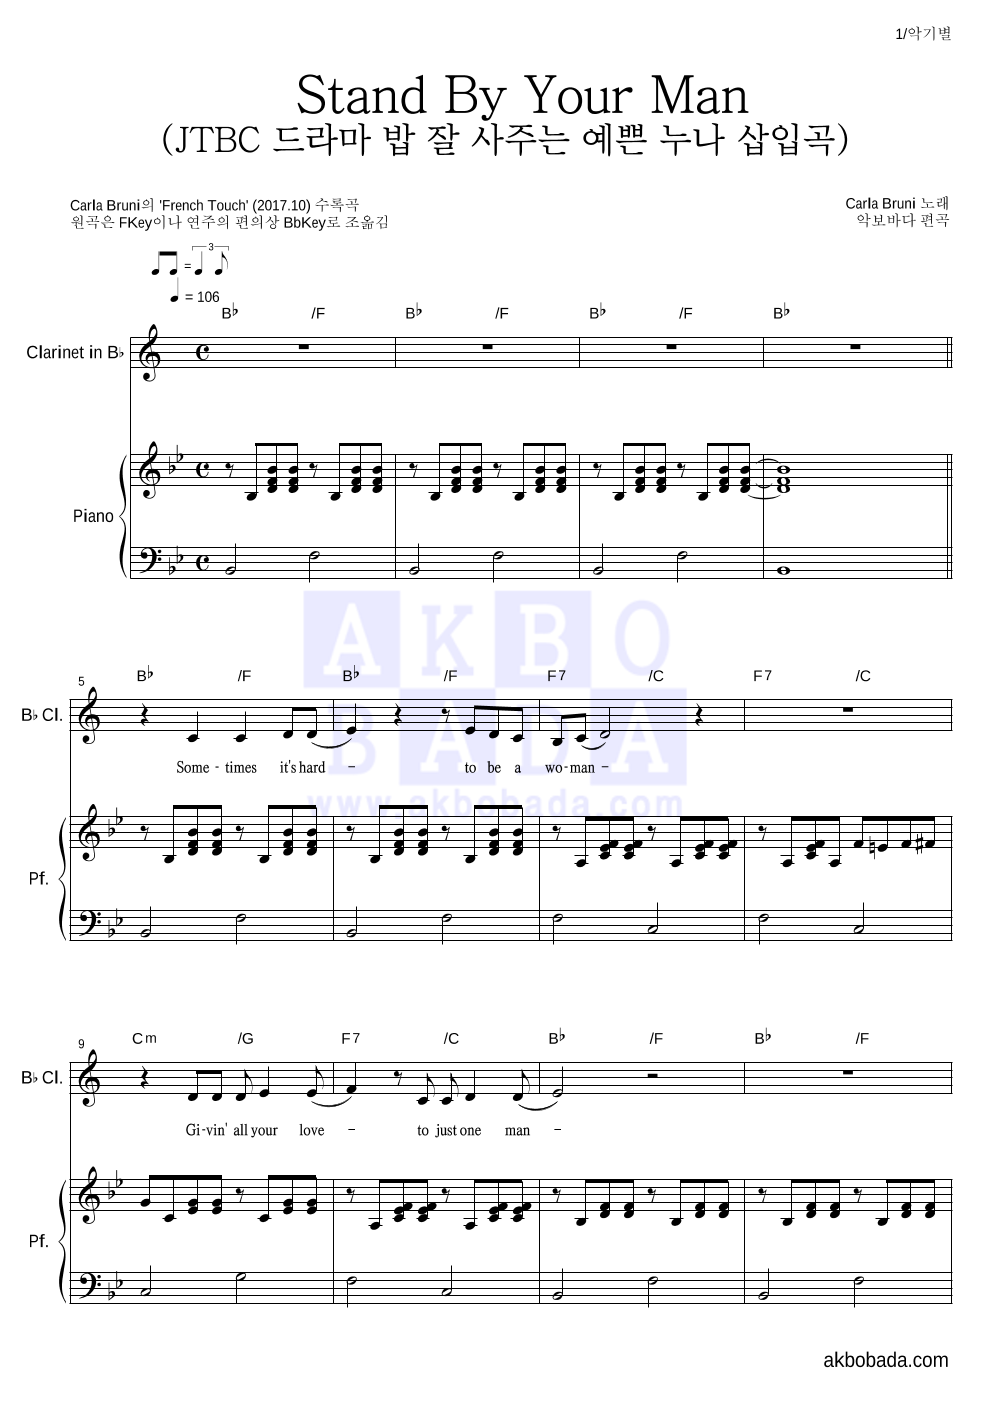 Carla Bruni - Stand By Your Man (JTBC 드라마 밥 잘 사주는 예쁜 누나 삽입곡) 클라리넷&피아노 악보 